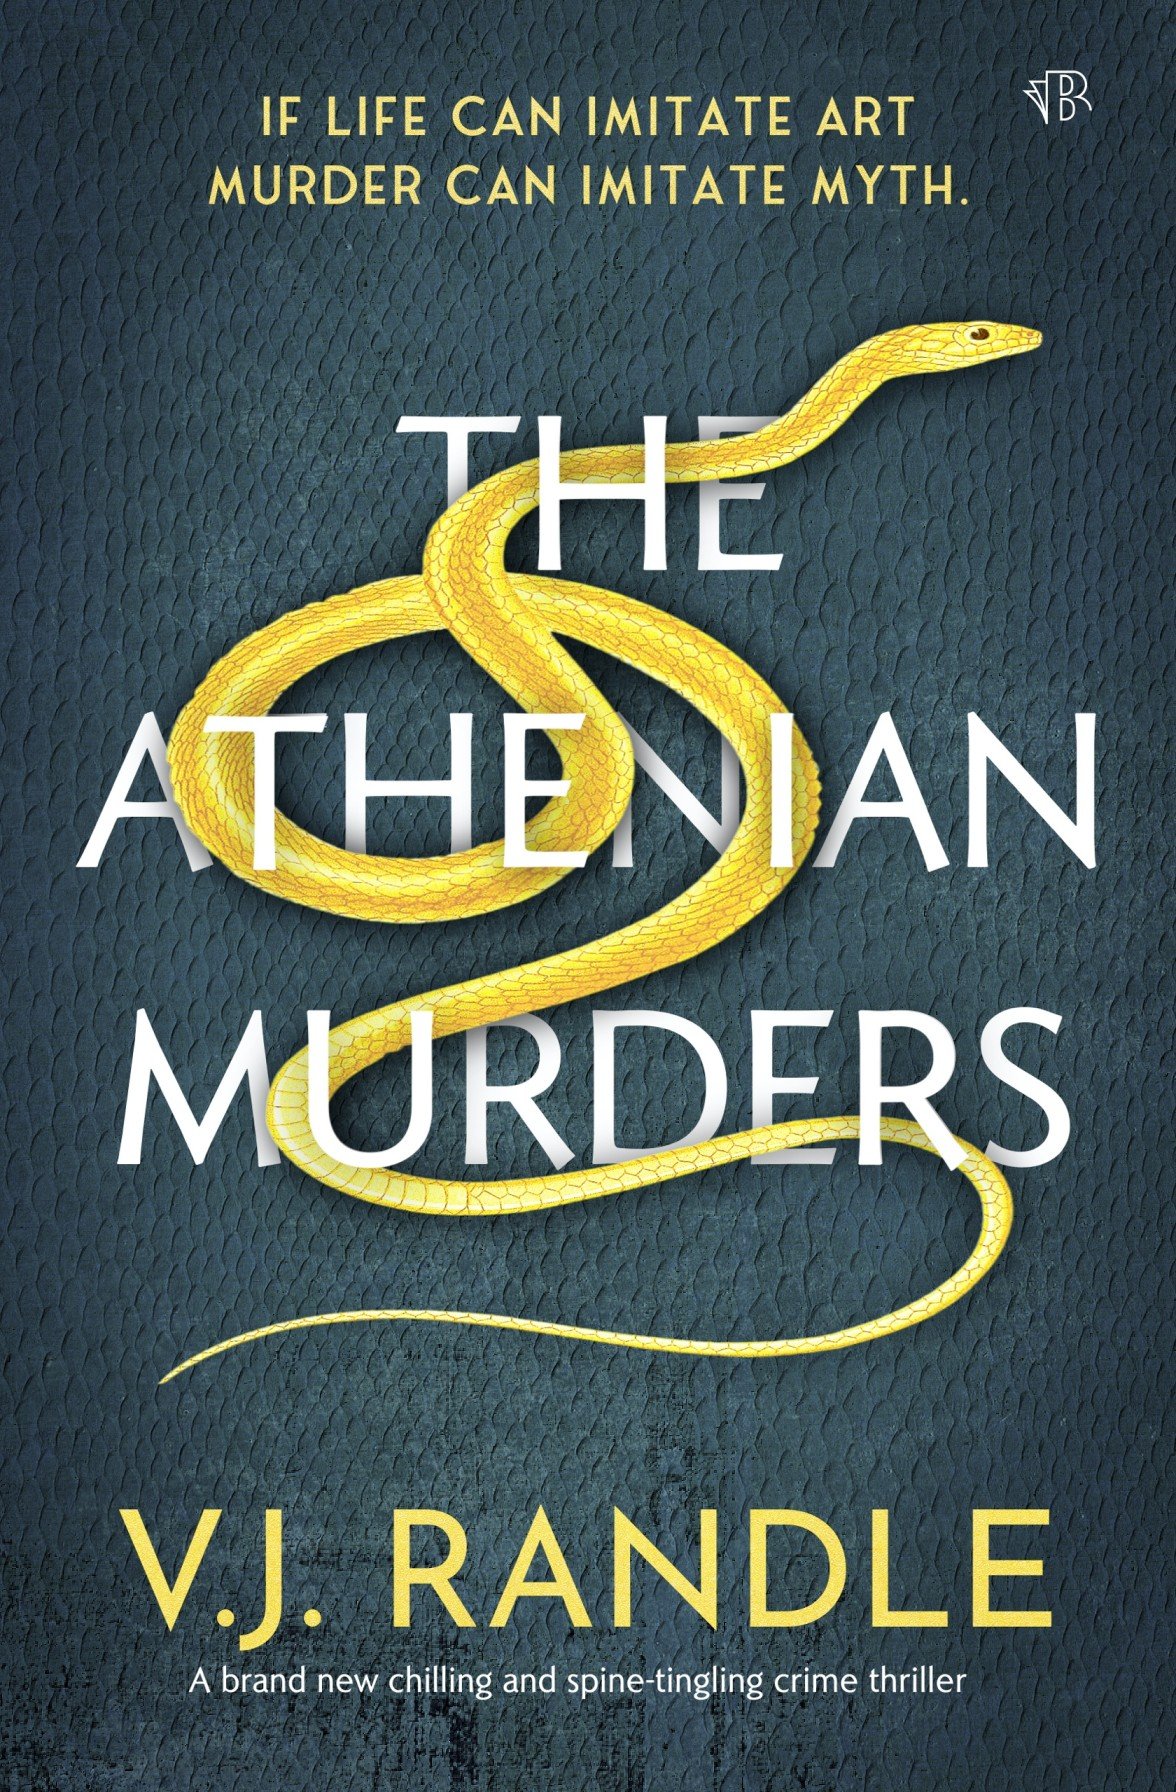 The-Athenian-Murders-Kindle (1).jpg